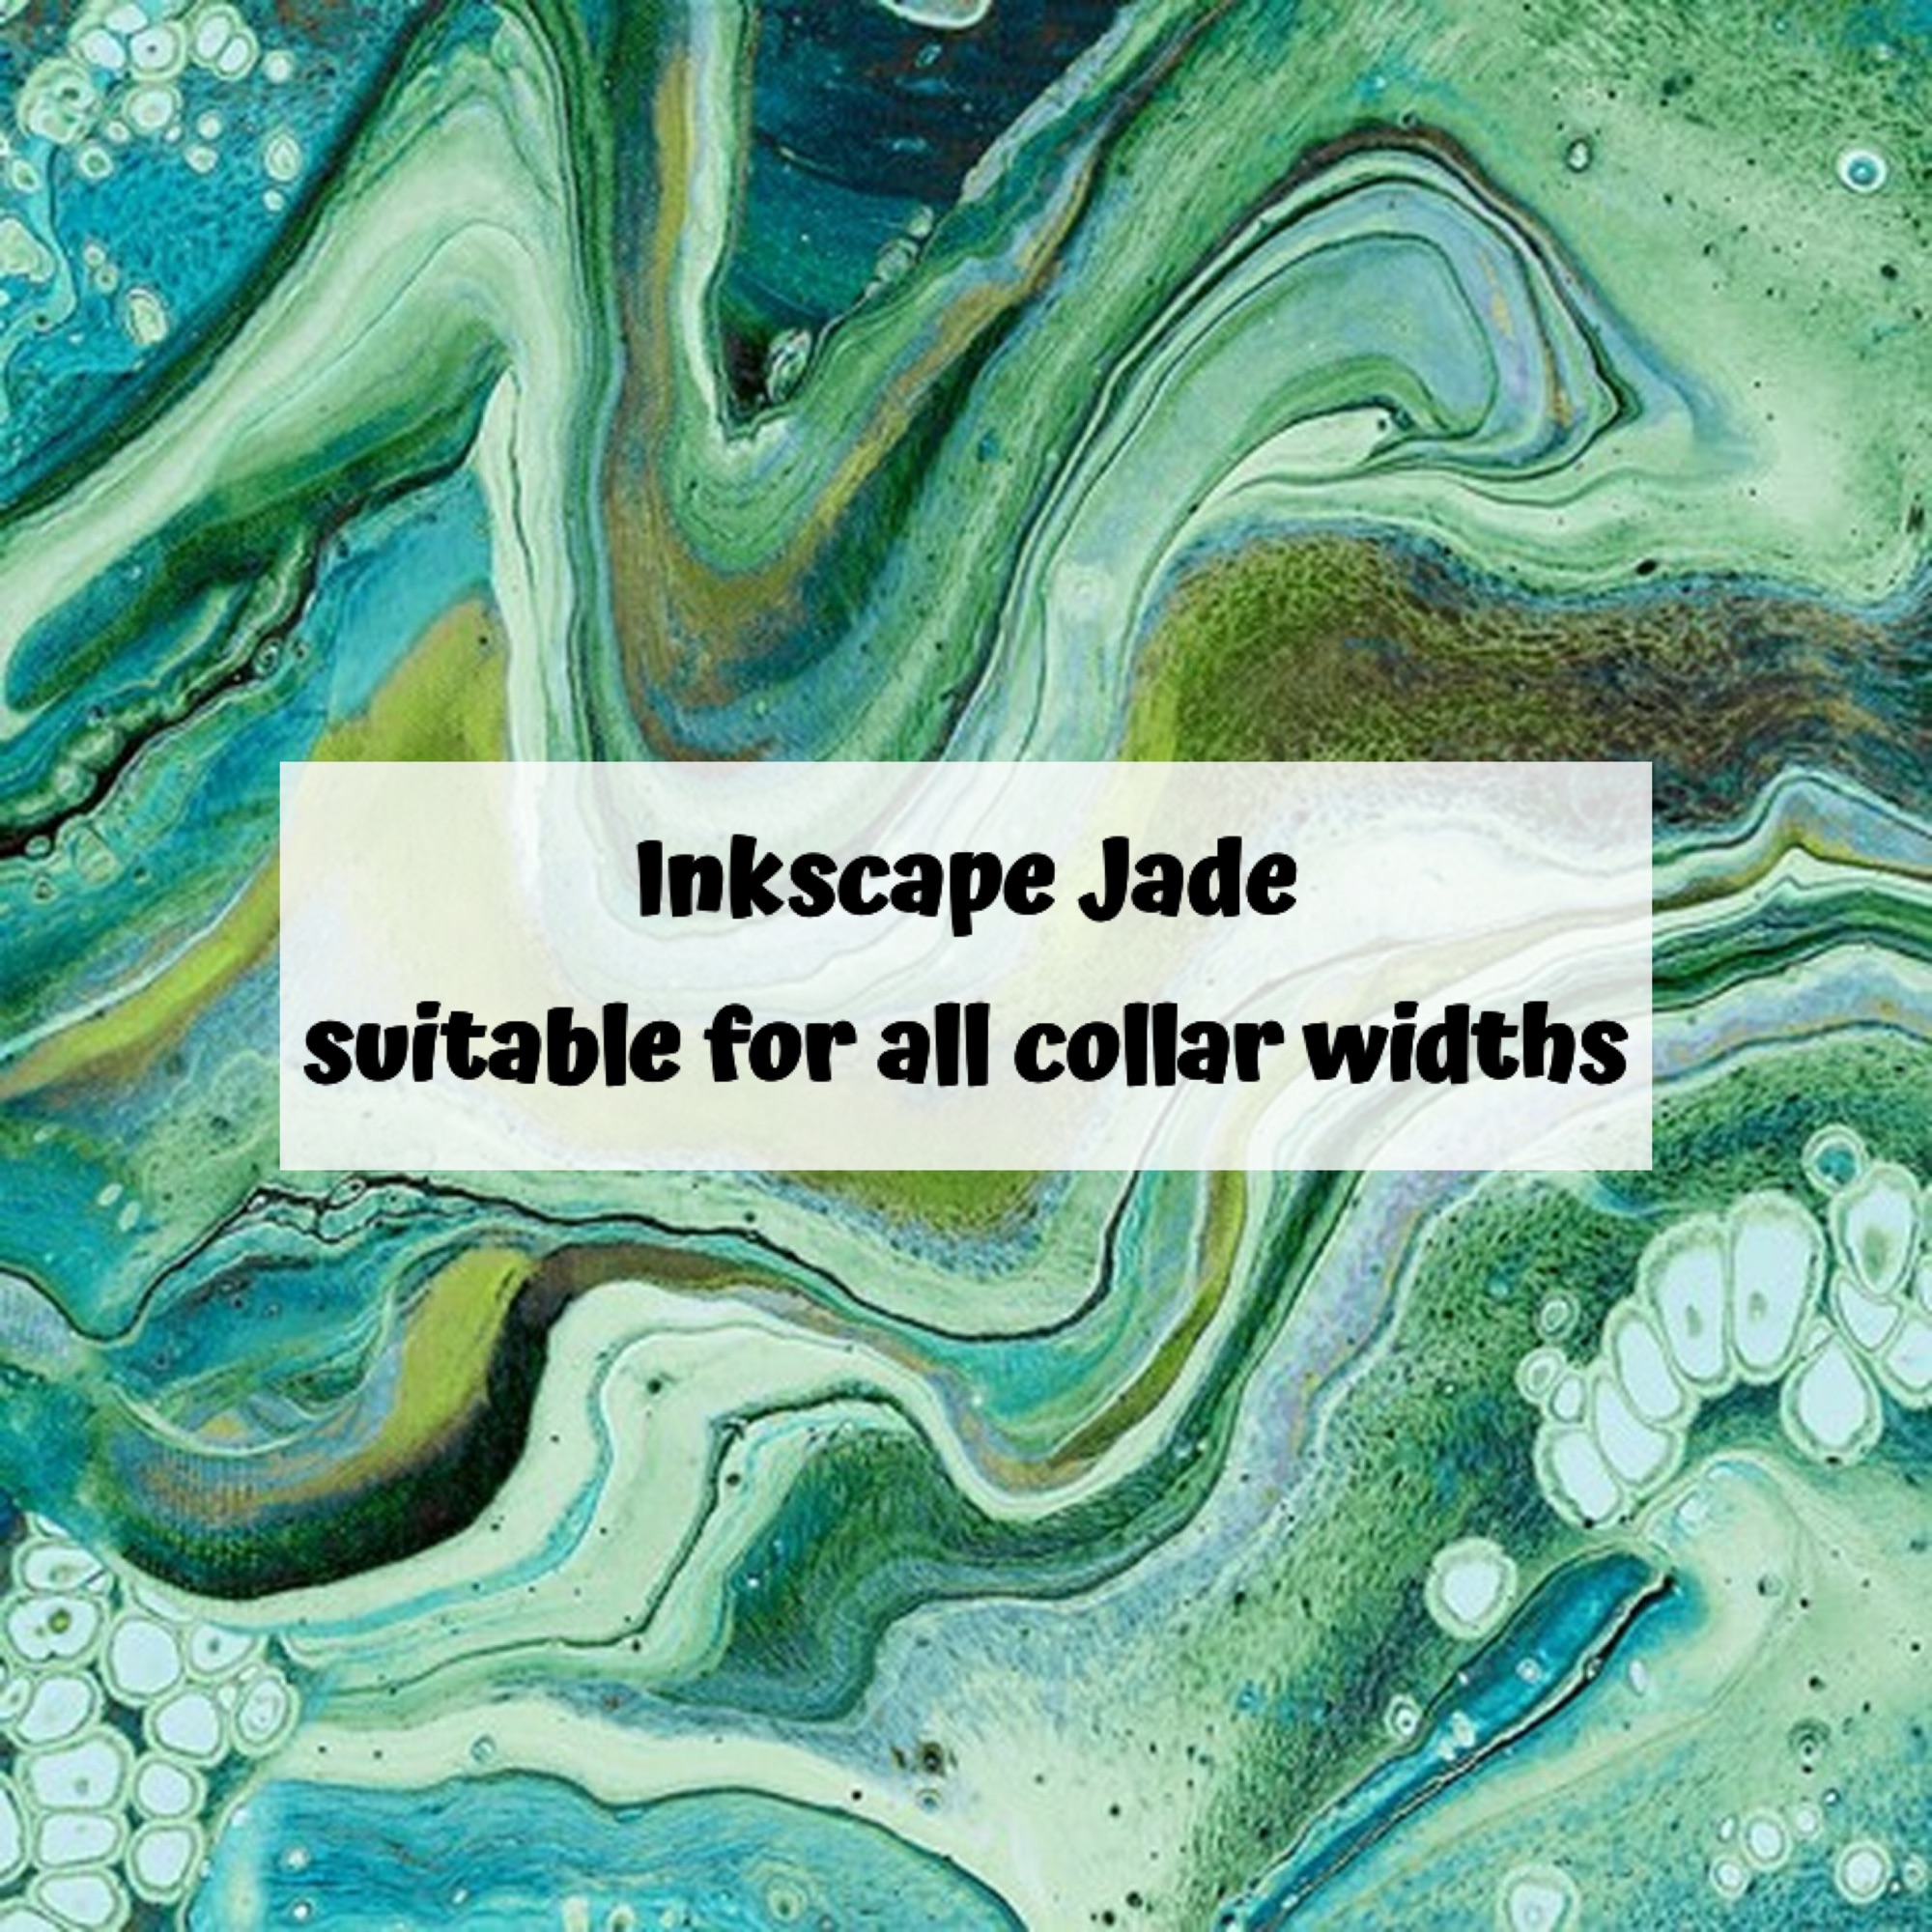 Inkscape Jade